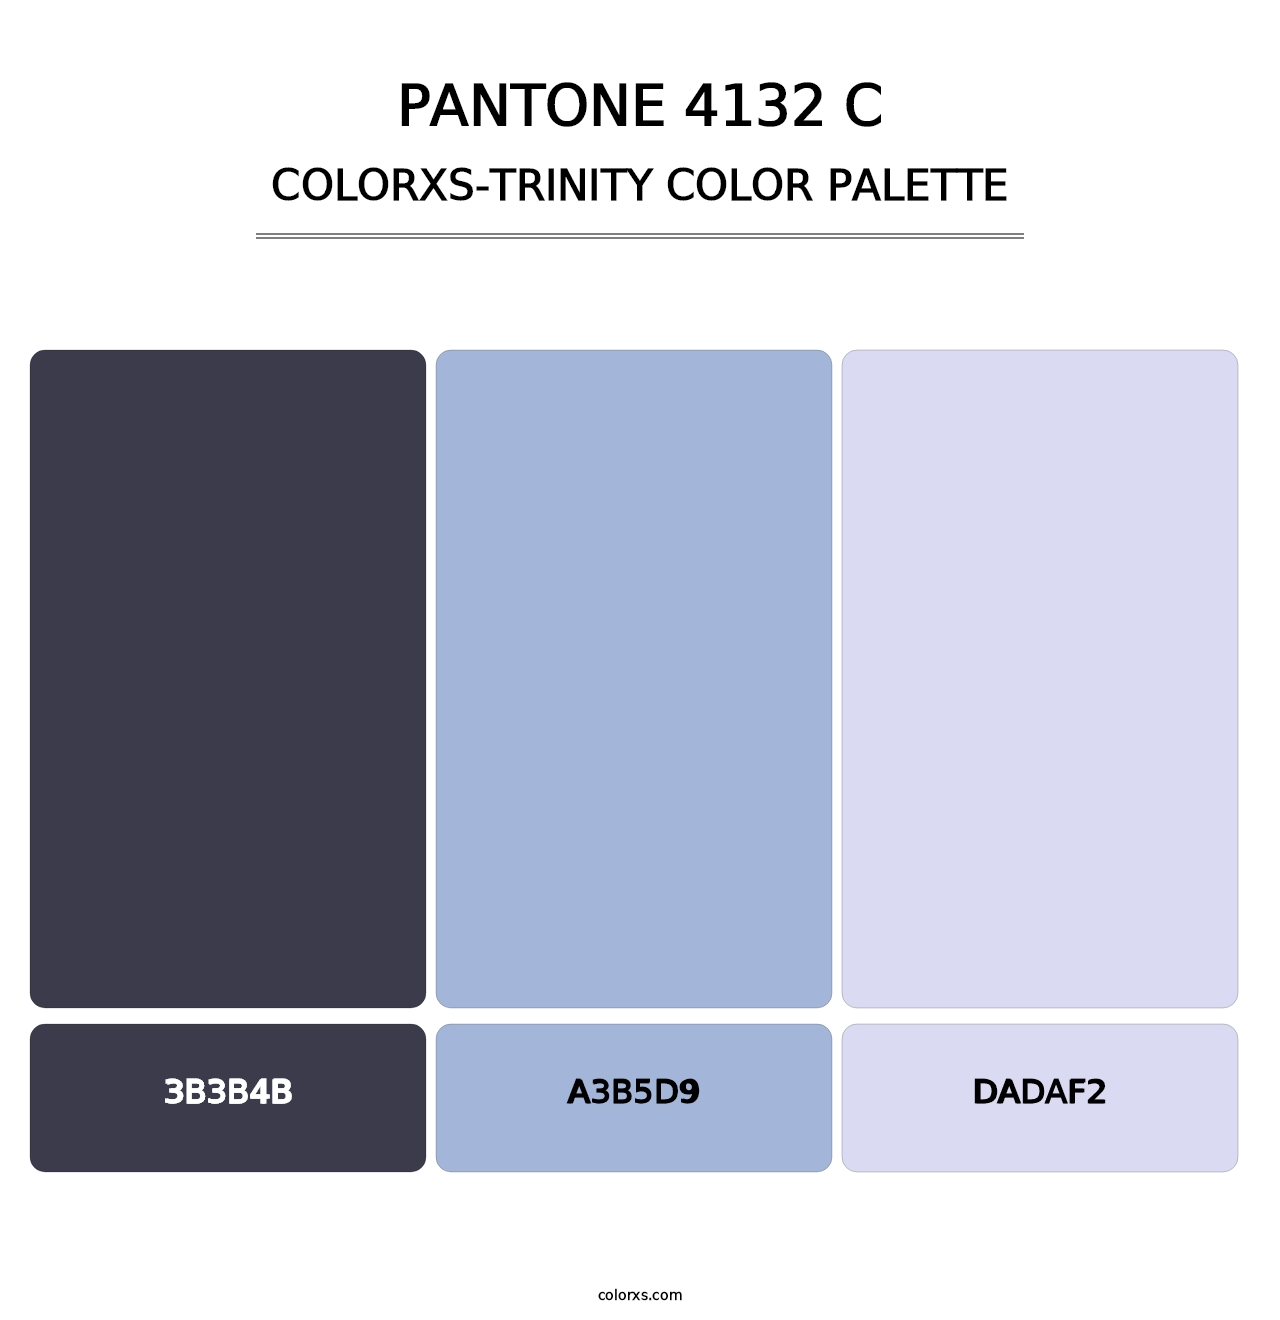 PANTONE 4132 C - Colorxs Trinity Palette